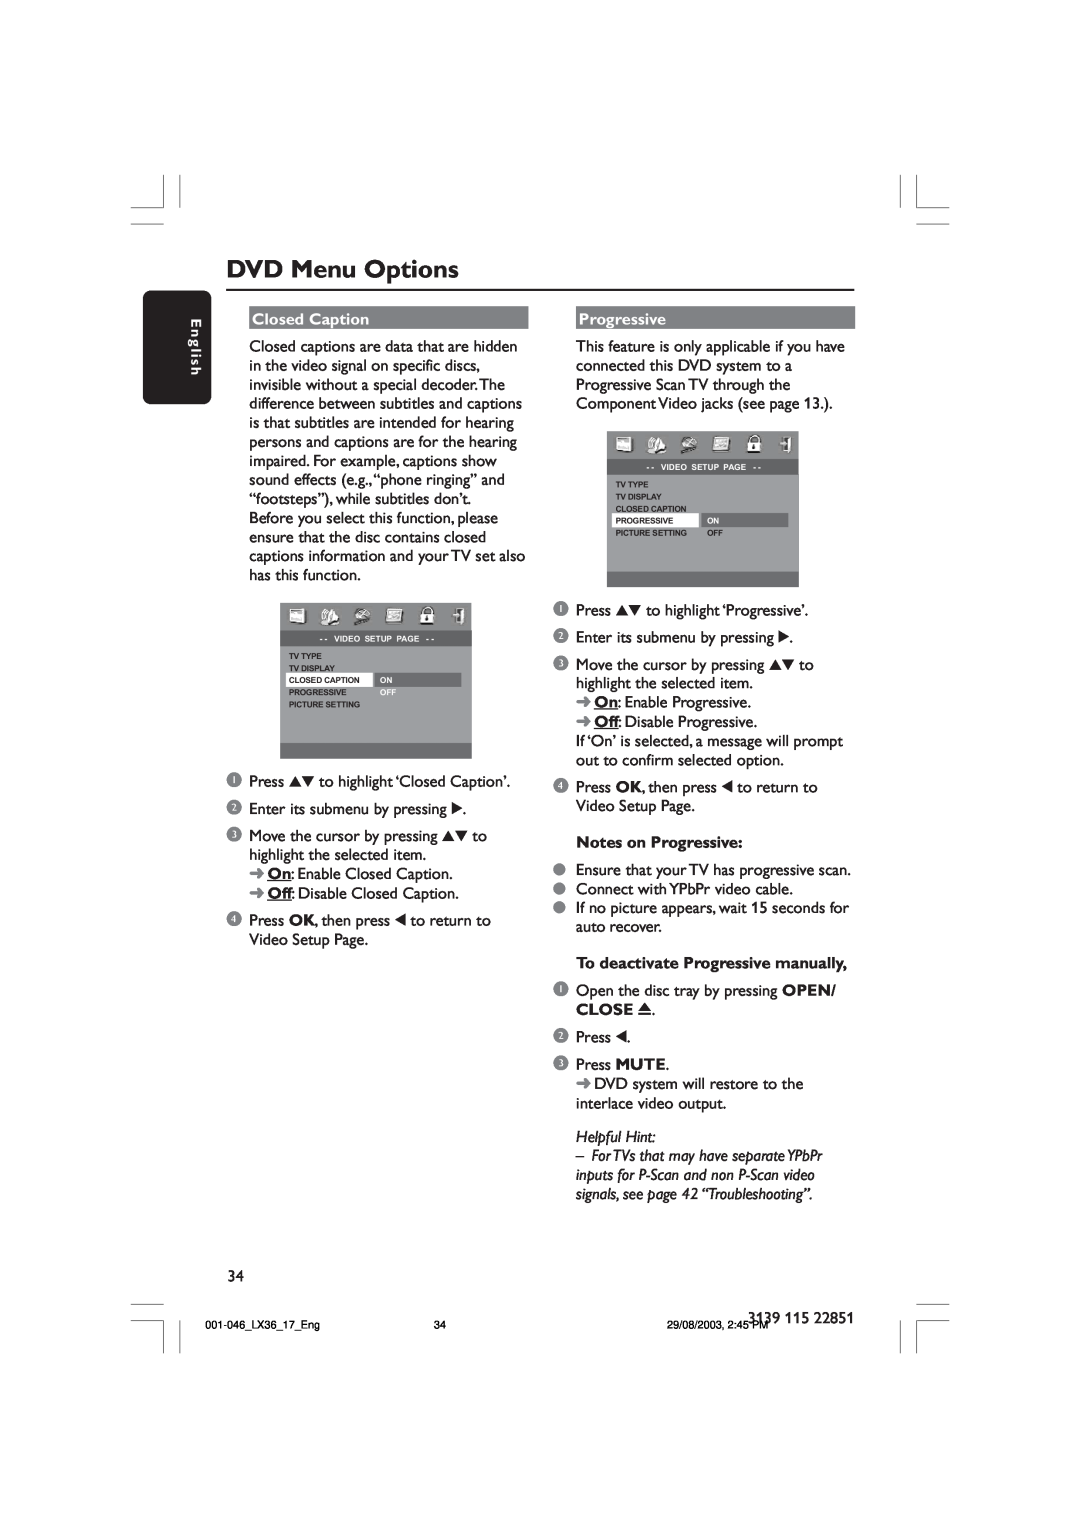 Philips LX3600 warranty DVD Menu Options, Closed Caption, Notes on Progressive, To deactivate Progressive manually 